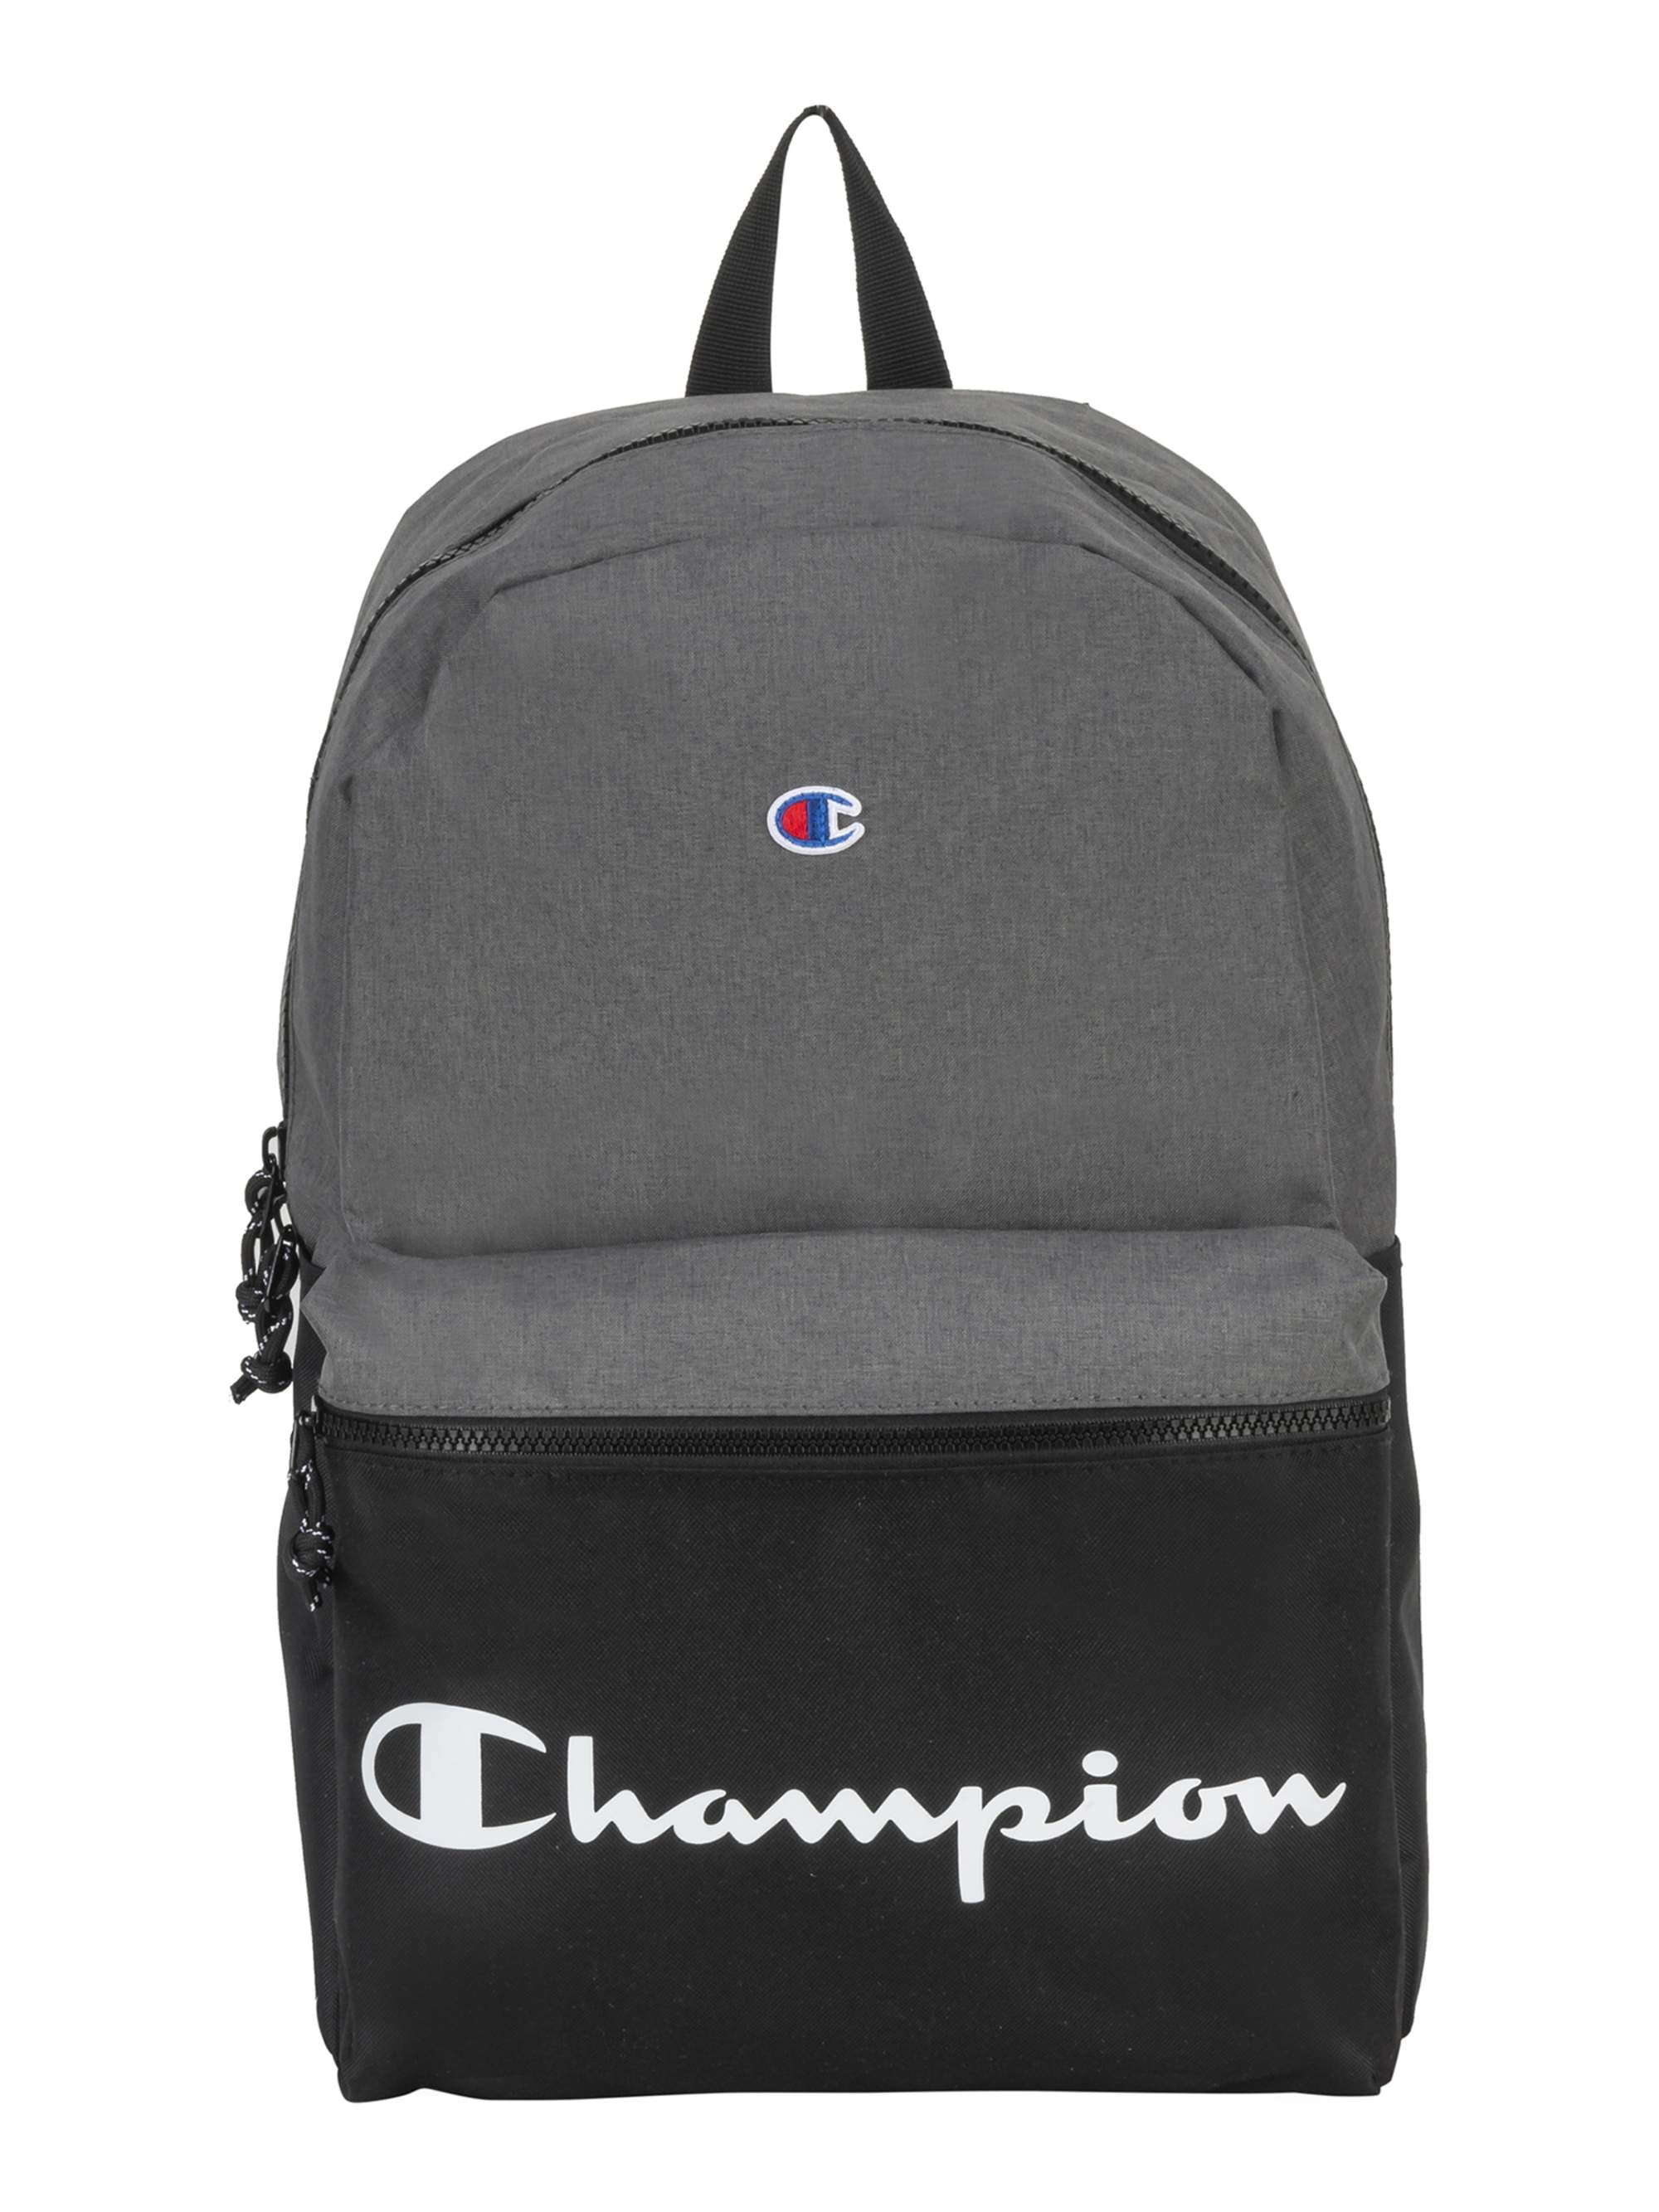 Champion Manuscript Backpack, Heather Grey - Walmart.com